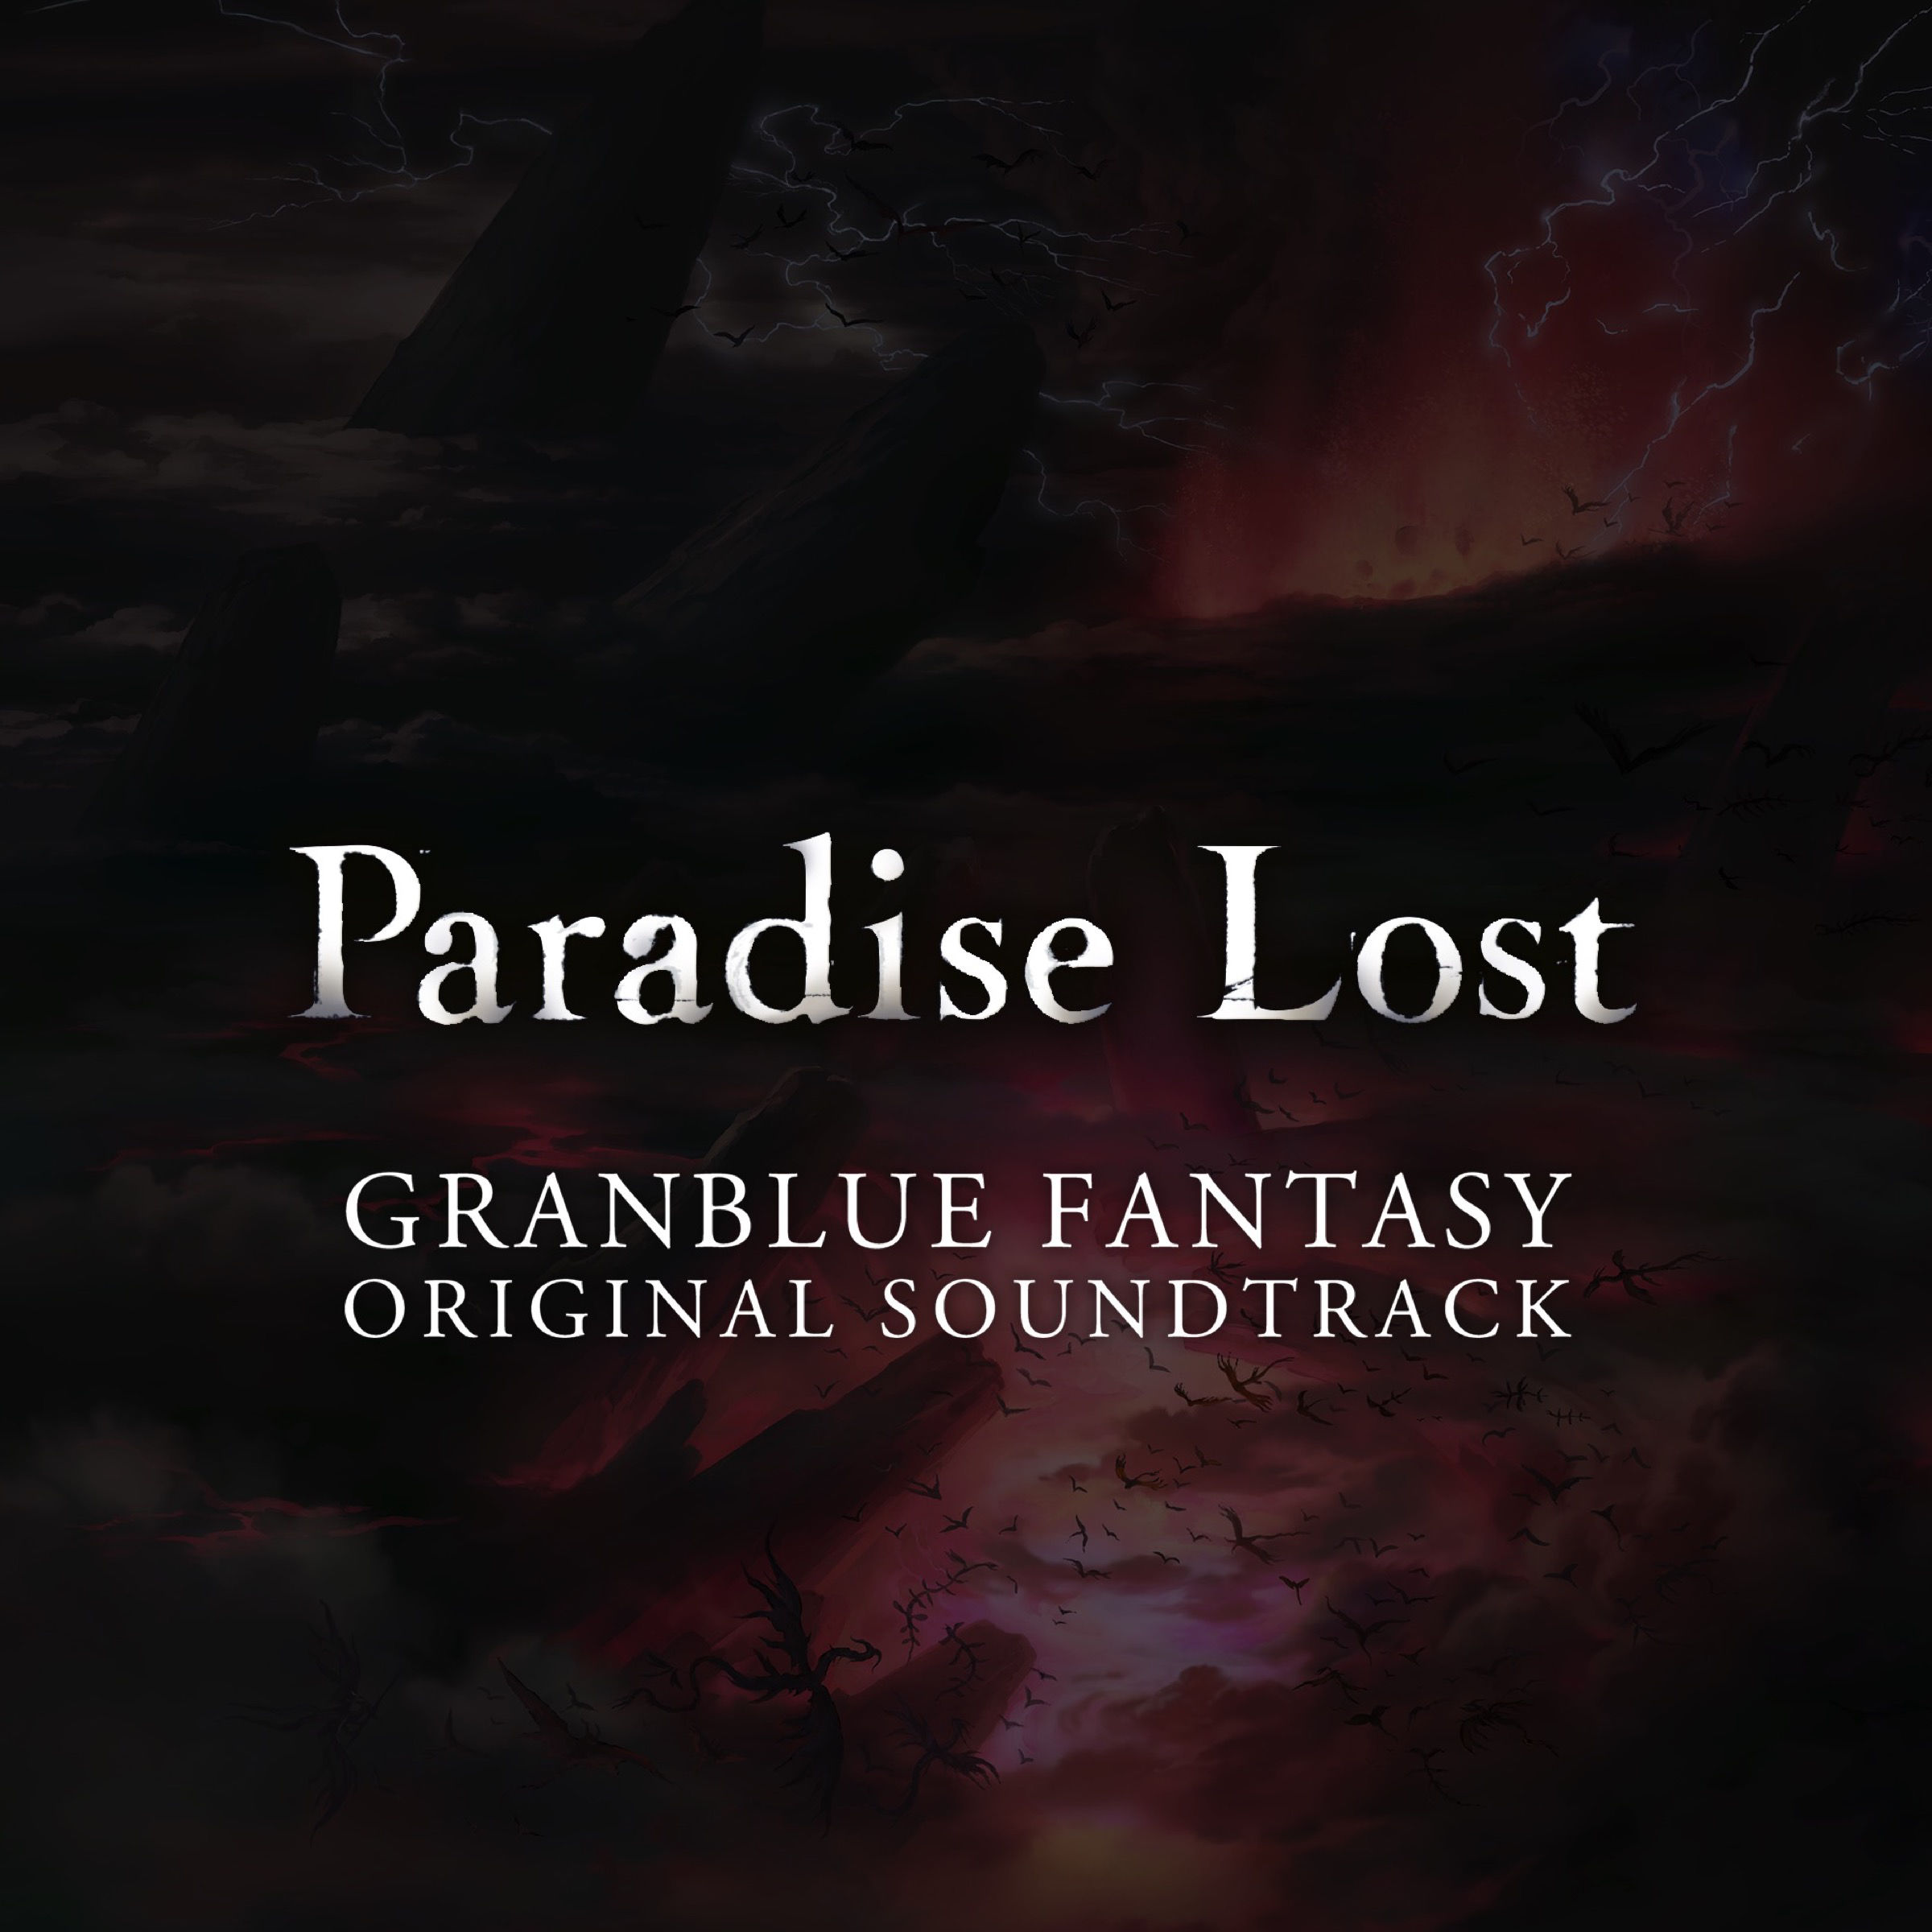 Lost soundtrack. Misery meat sodikken. Paradise Lost "Obsidian". Lost in Paradise саундтрек к магической битве.